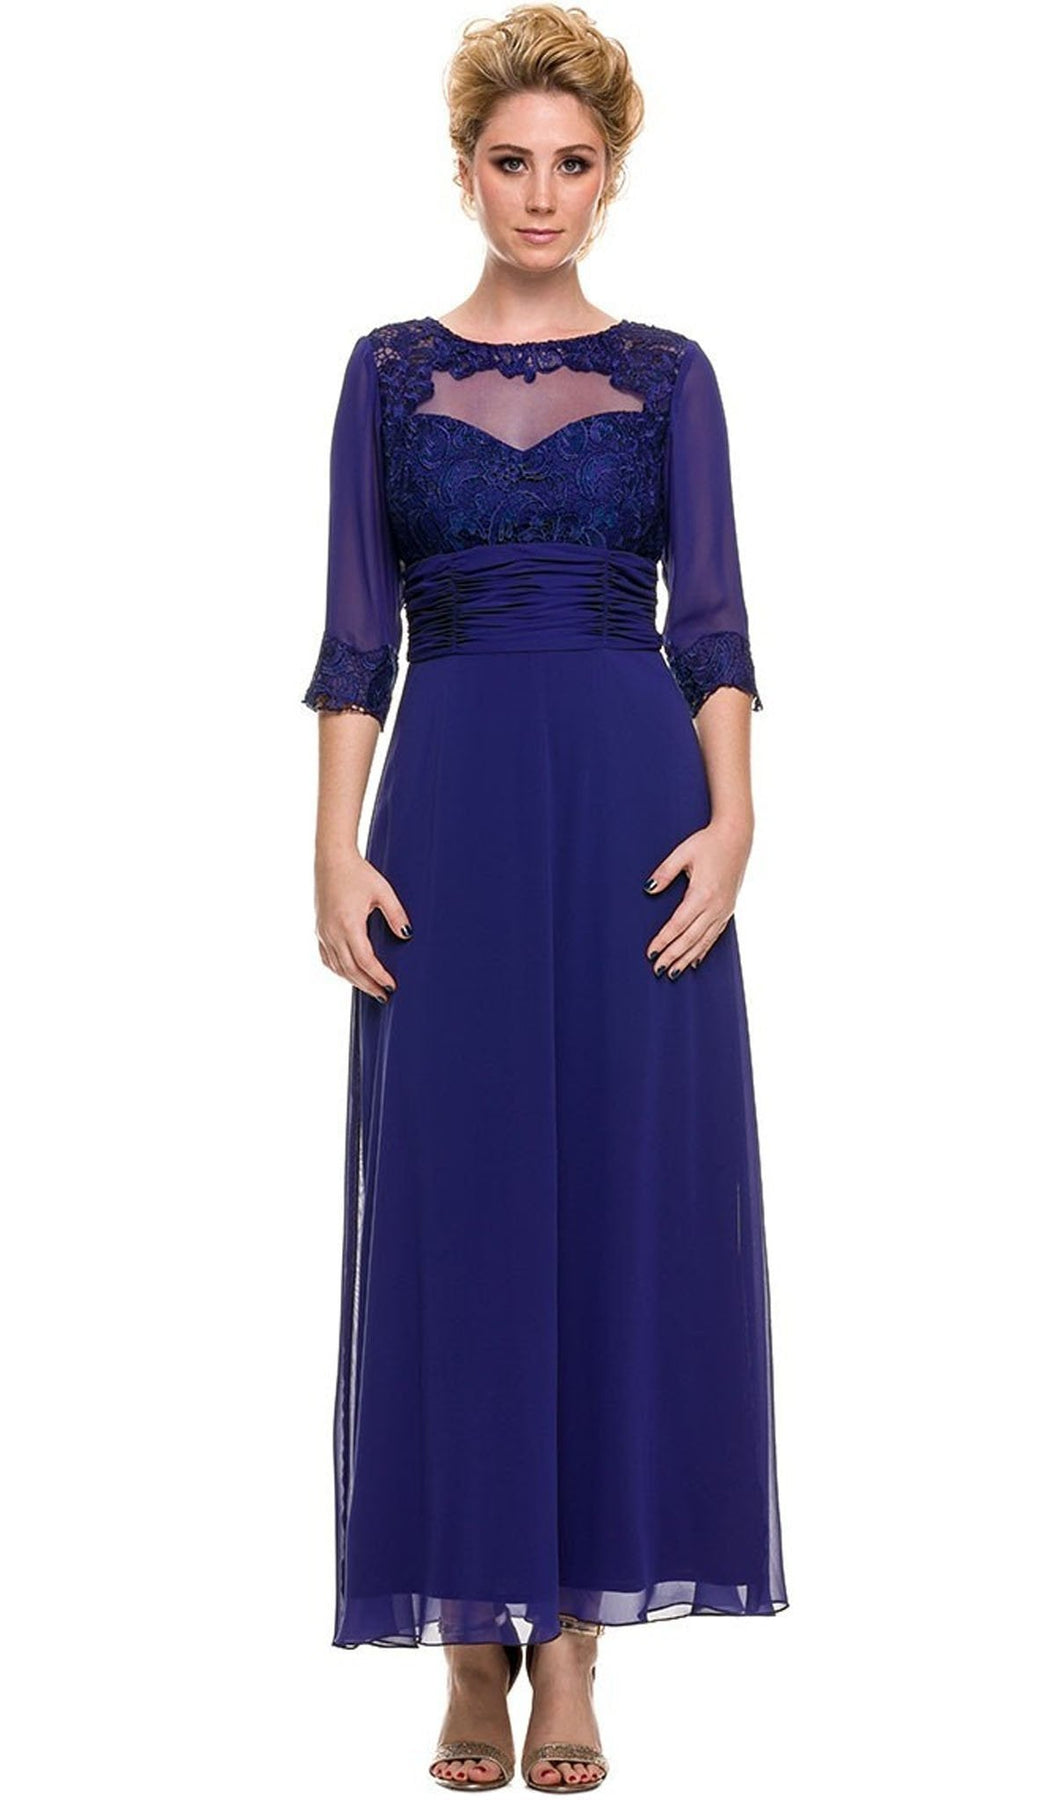 Nox Anabel - 5101 Quarter Length Sleeve Empire Long Formal Dress Mother of the Bride Dresses M / Royal Blue